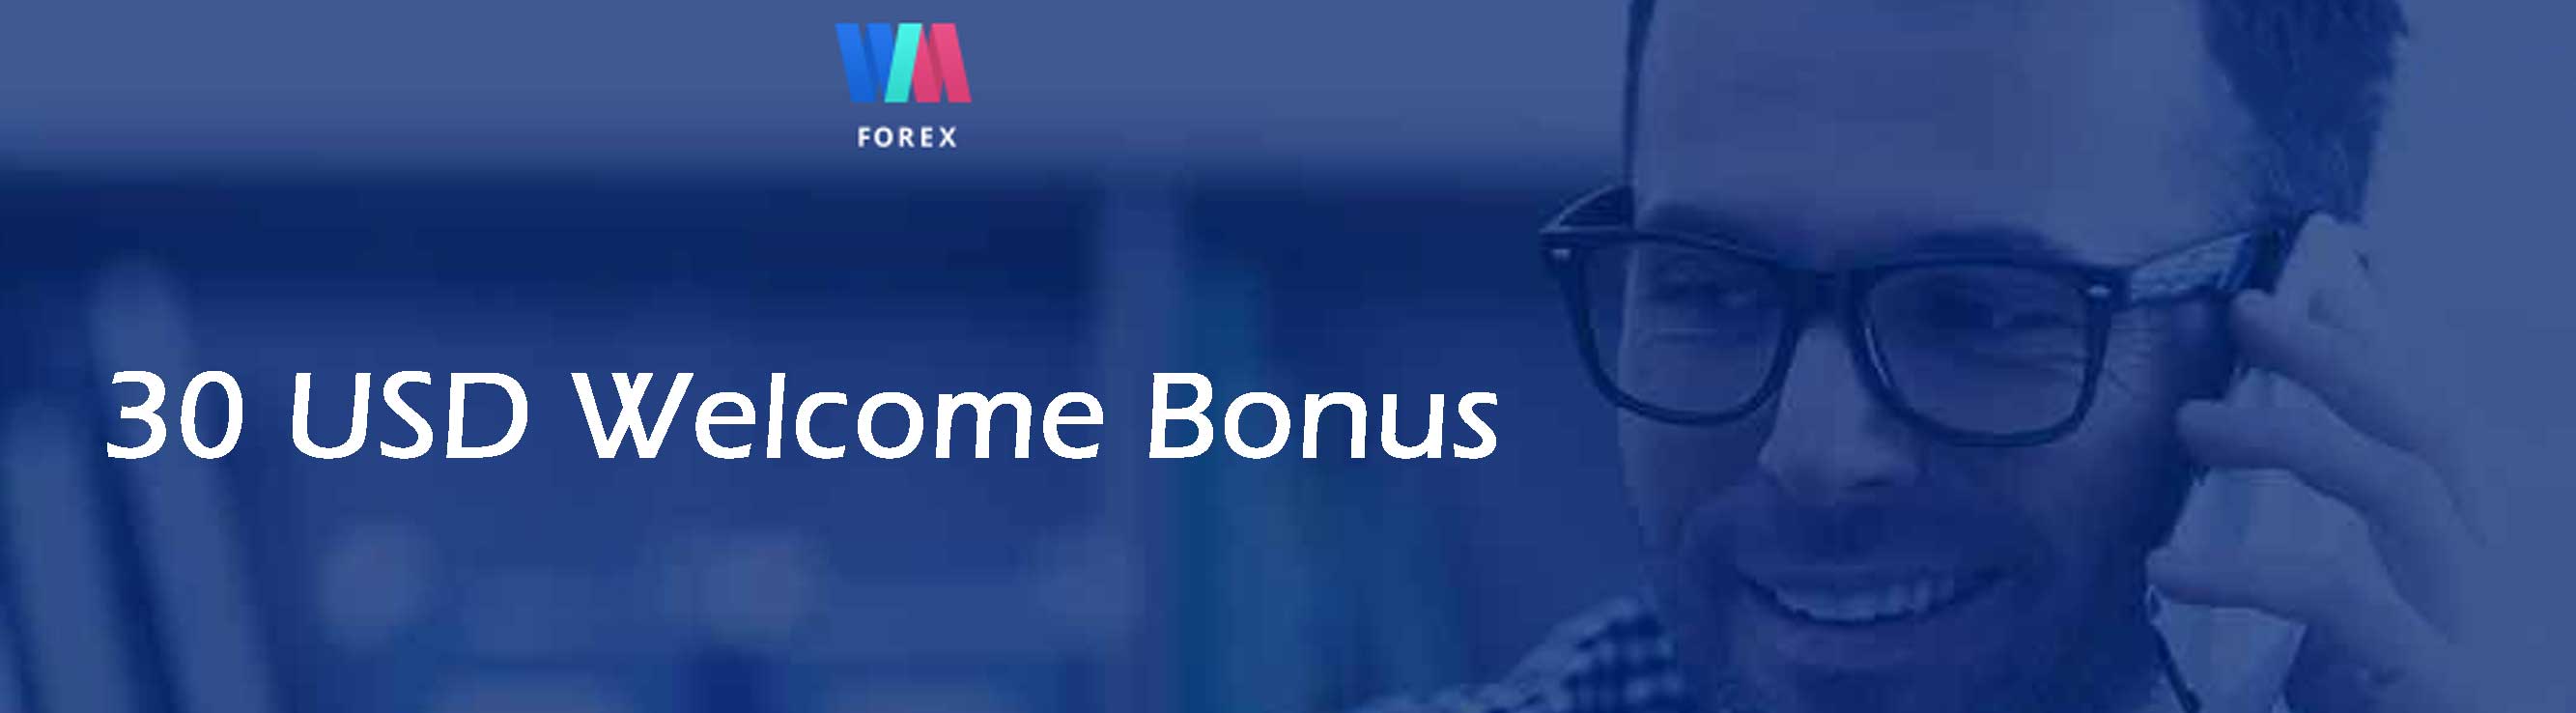 wmforex welcome bonus